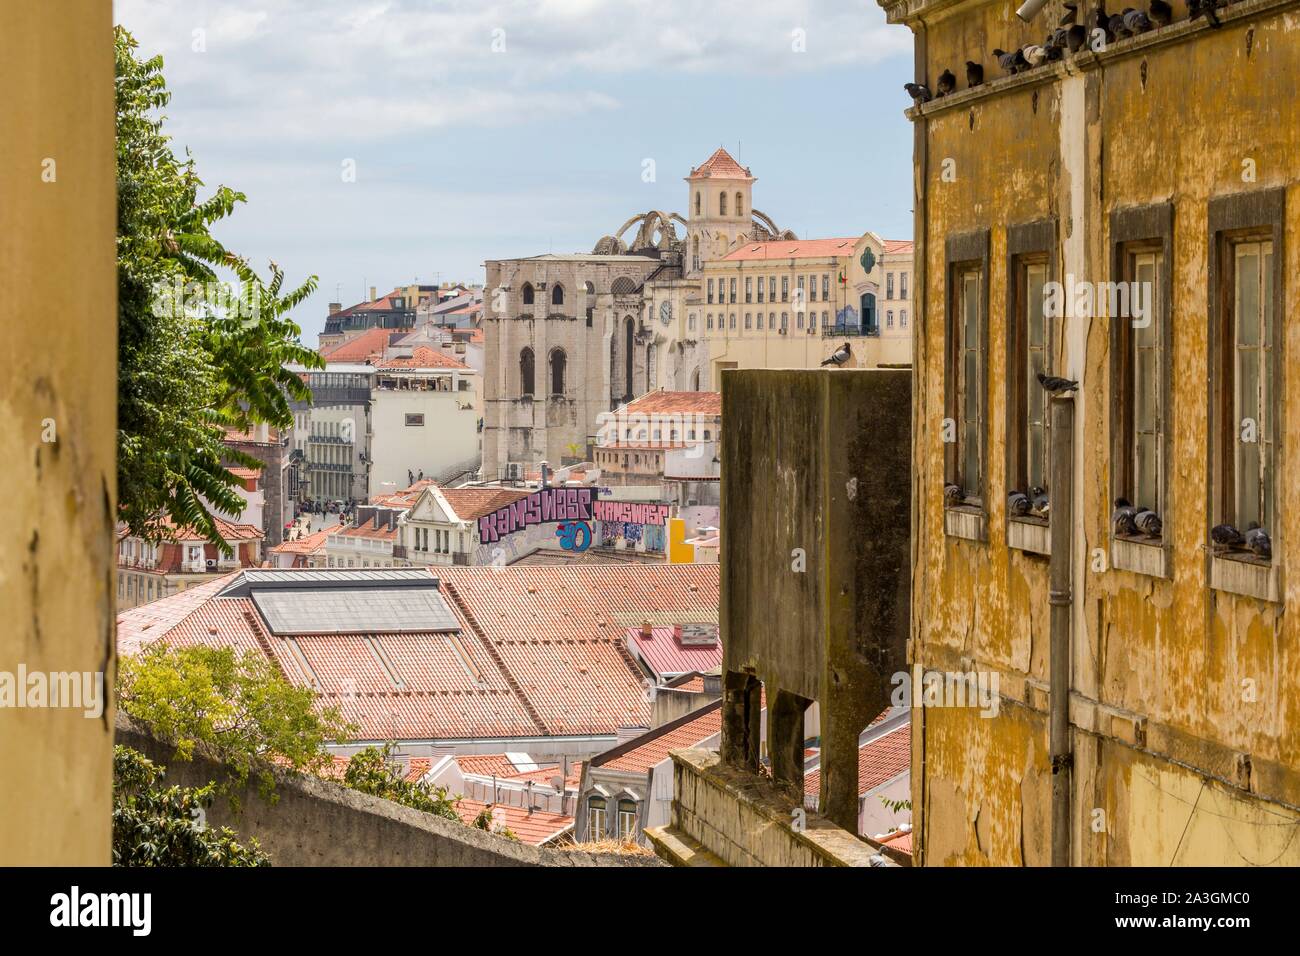 Portugal, Lisbon, Sant'ana district, view of Carmo church Stock Photo